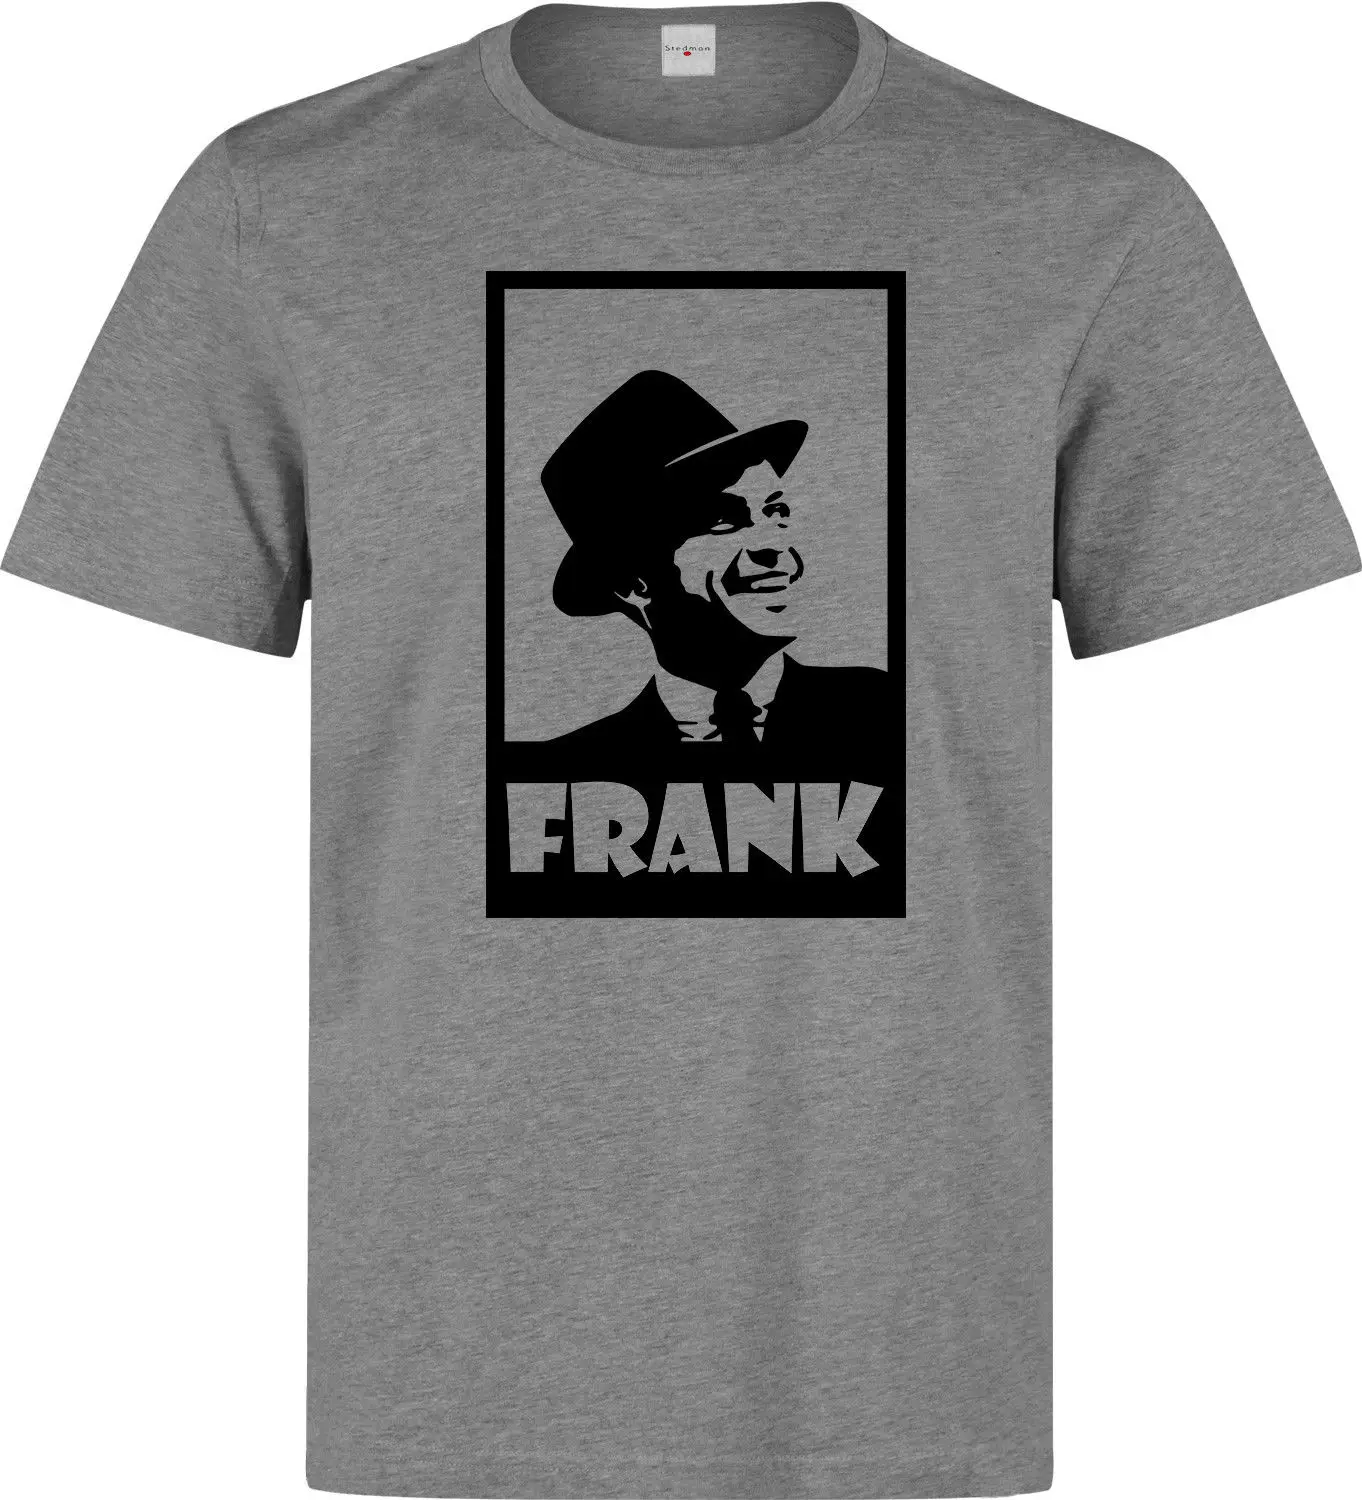 

2019 New Summer Men Hot Sale Fashion Frank Sinatra Famous American Singer Black and White Art Men's Grey T Shirt Tee Shirt